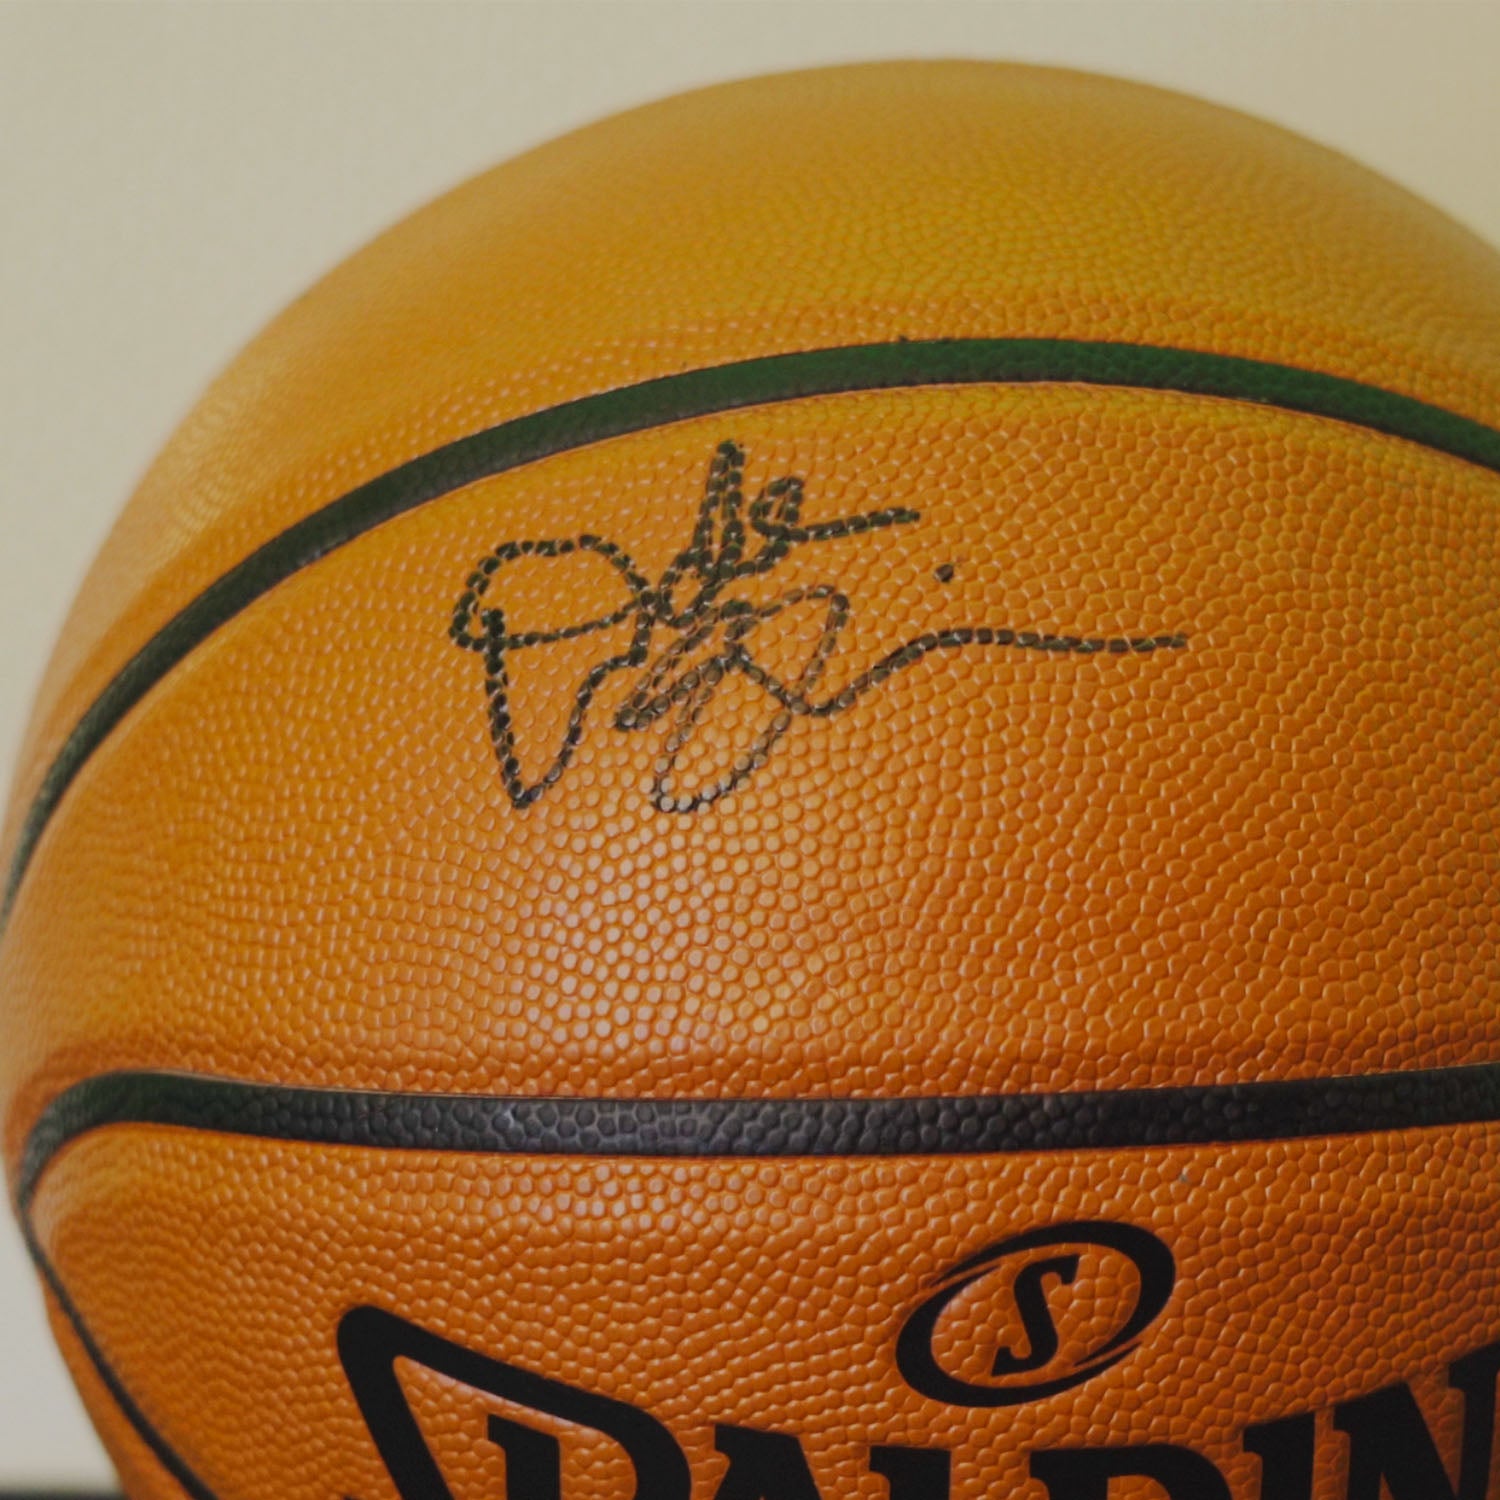 Dale Ellis Autographed Signed Basketball!